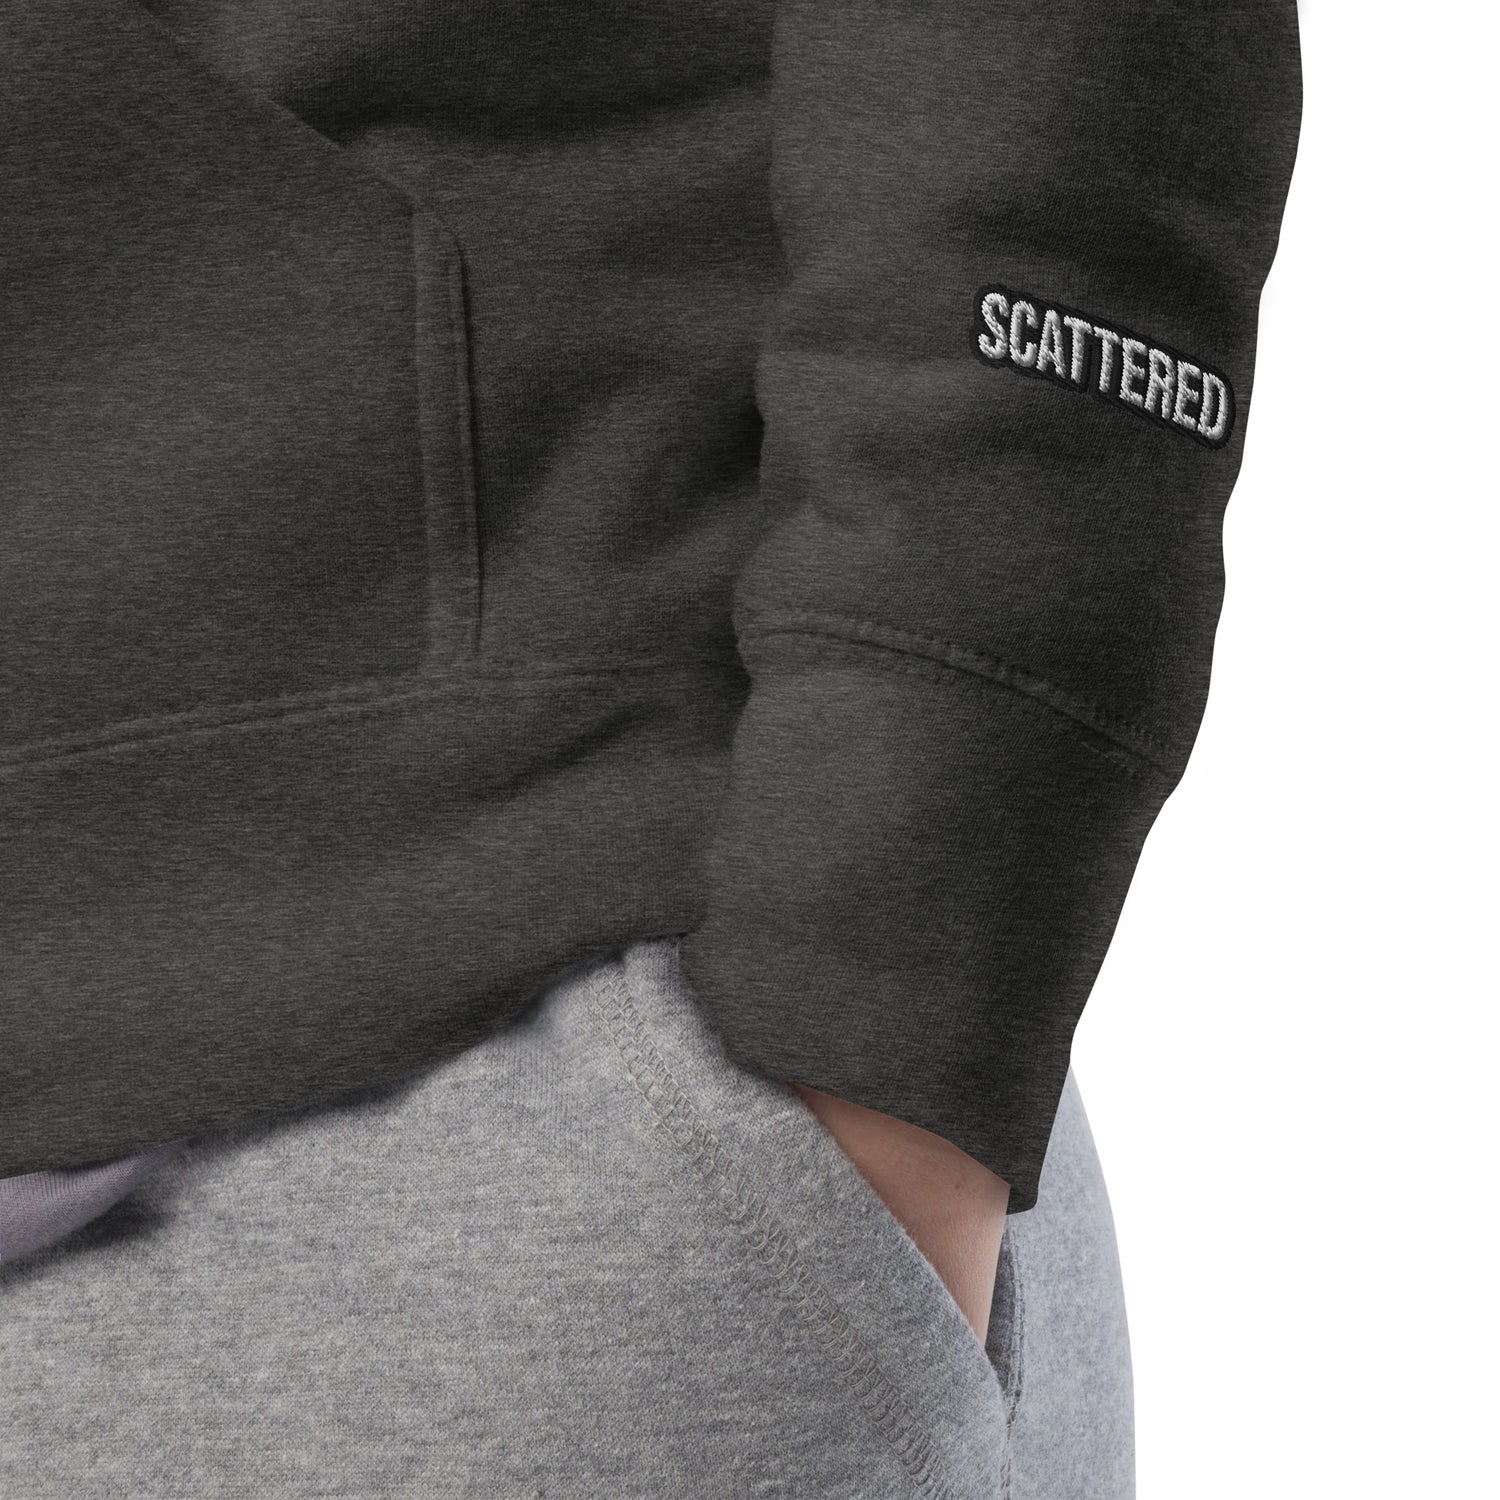 New York Apple Logo Embroidered Charcoal Grey Streetwear Hoodie Sweatshirt | Scattered